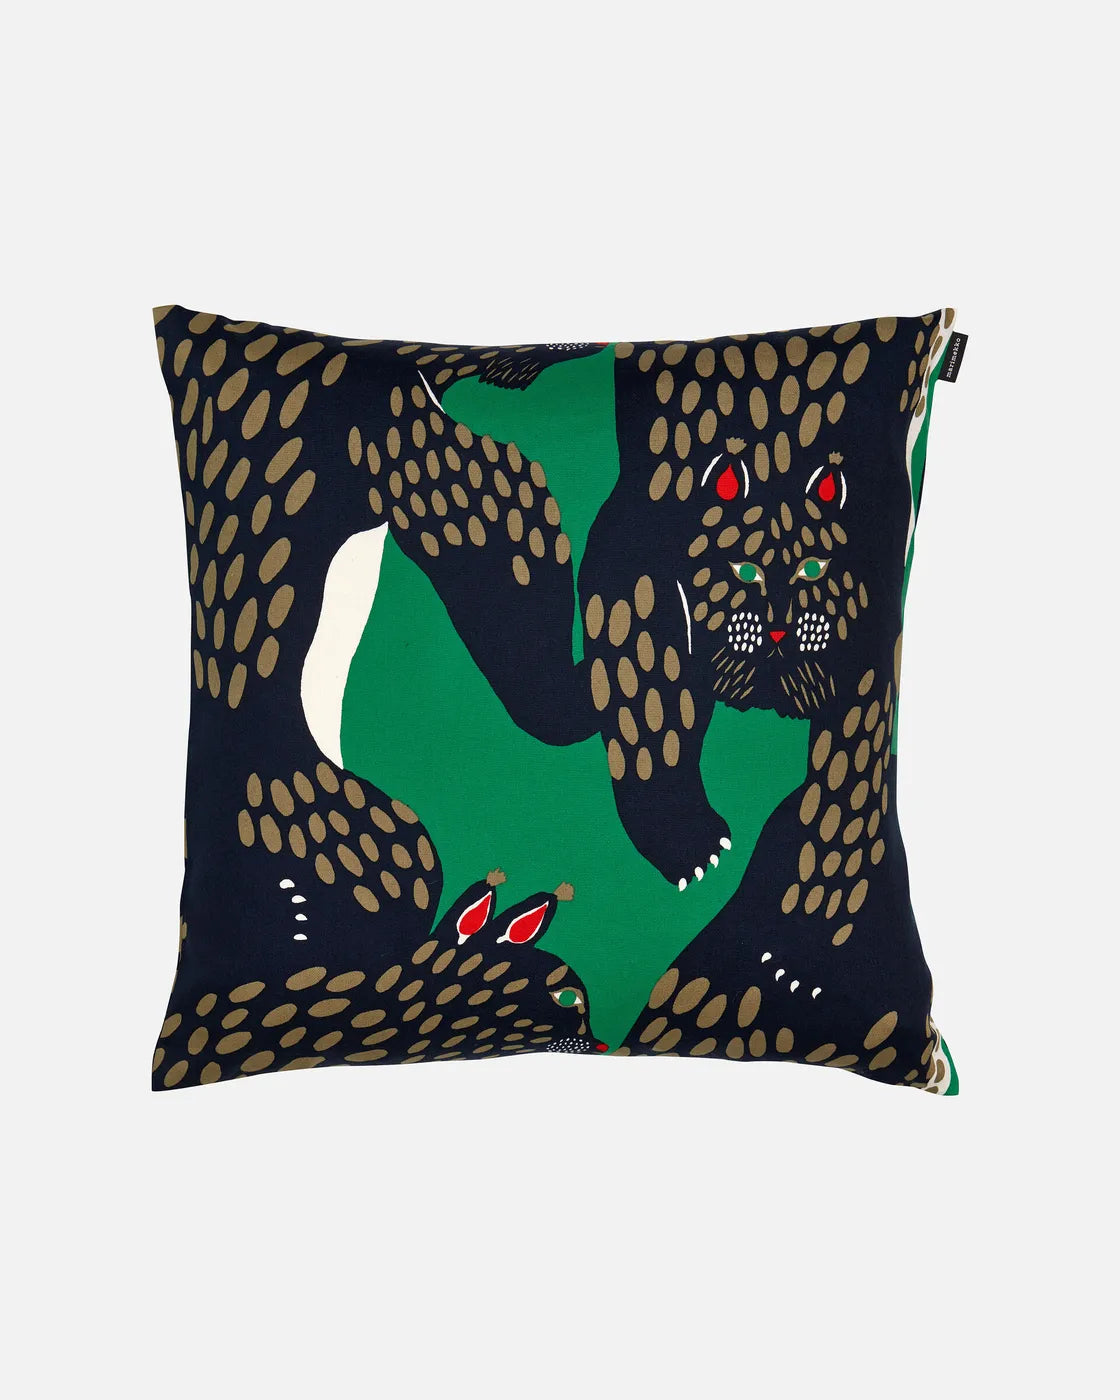 Ilves Cushion Cover, Green/Dark Navy.  20 x 20